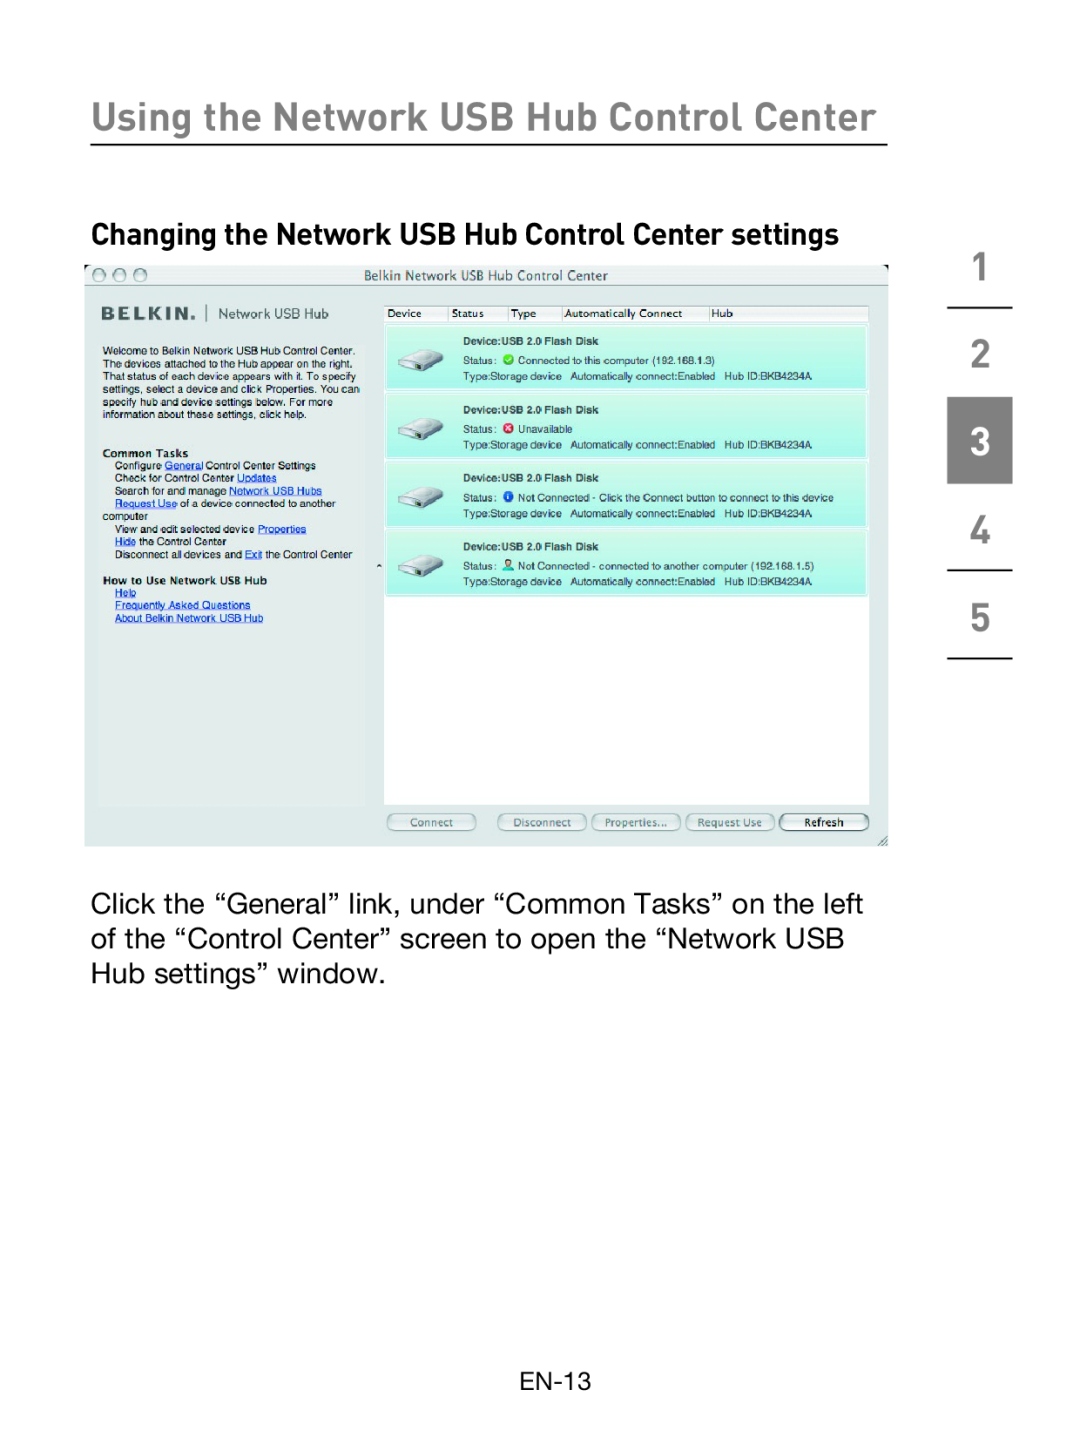 Belkin F5L009 Changing the Network USB Hub Control Center settings, Using the Network USB Hub Control Center, EN-13 